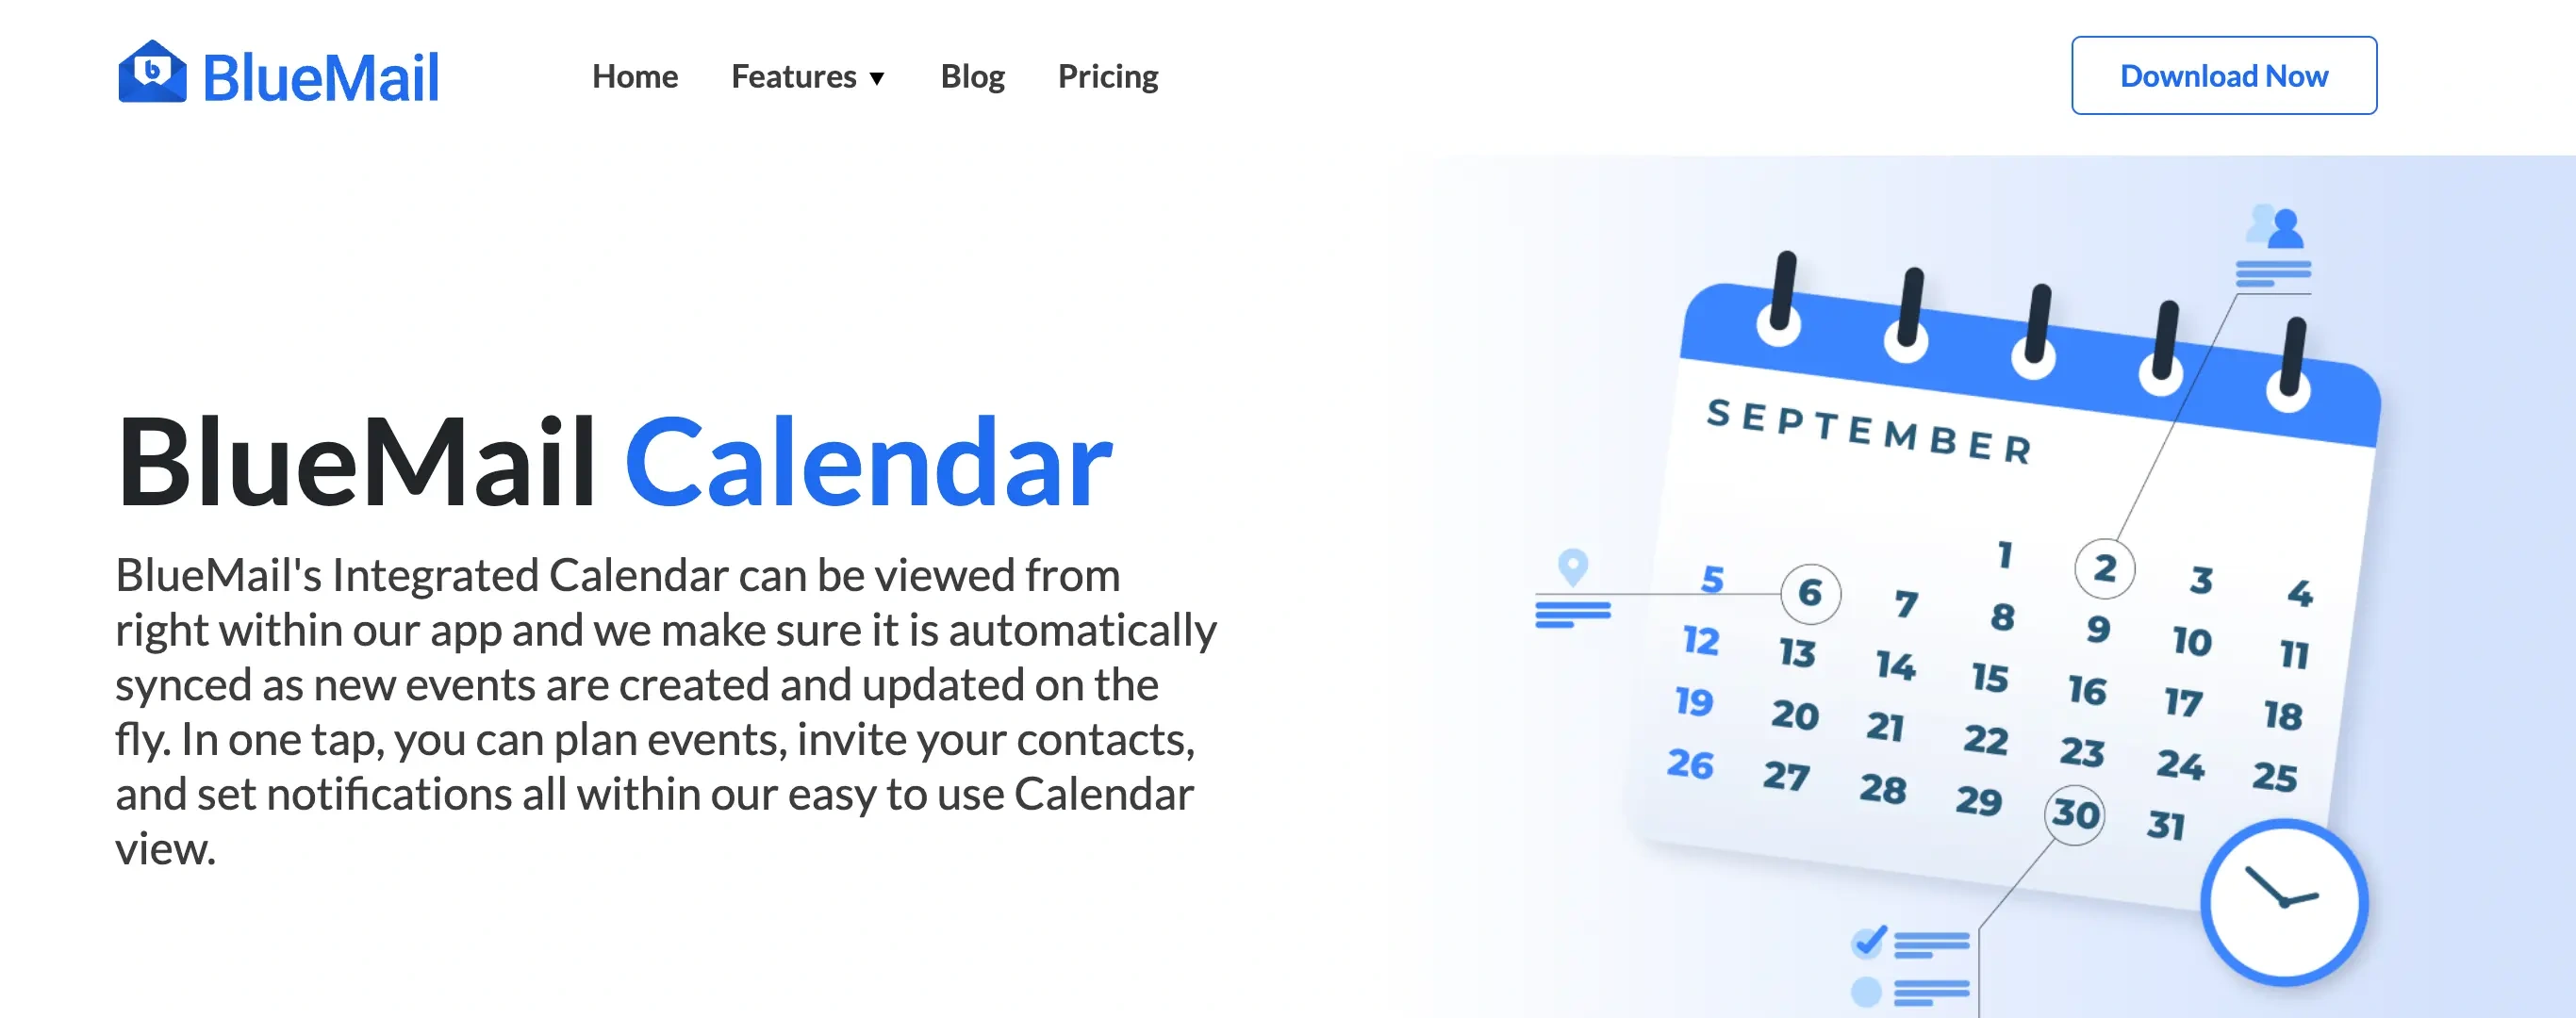 BlueMail calendar app